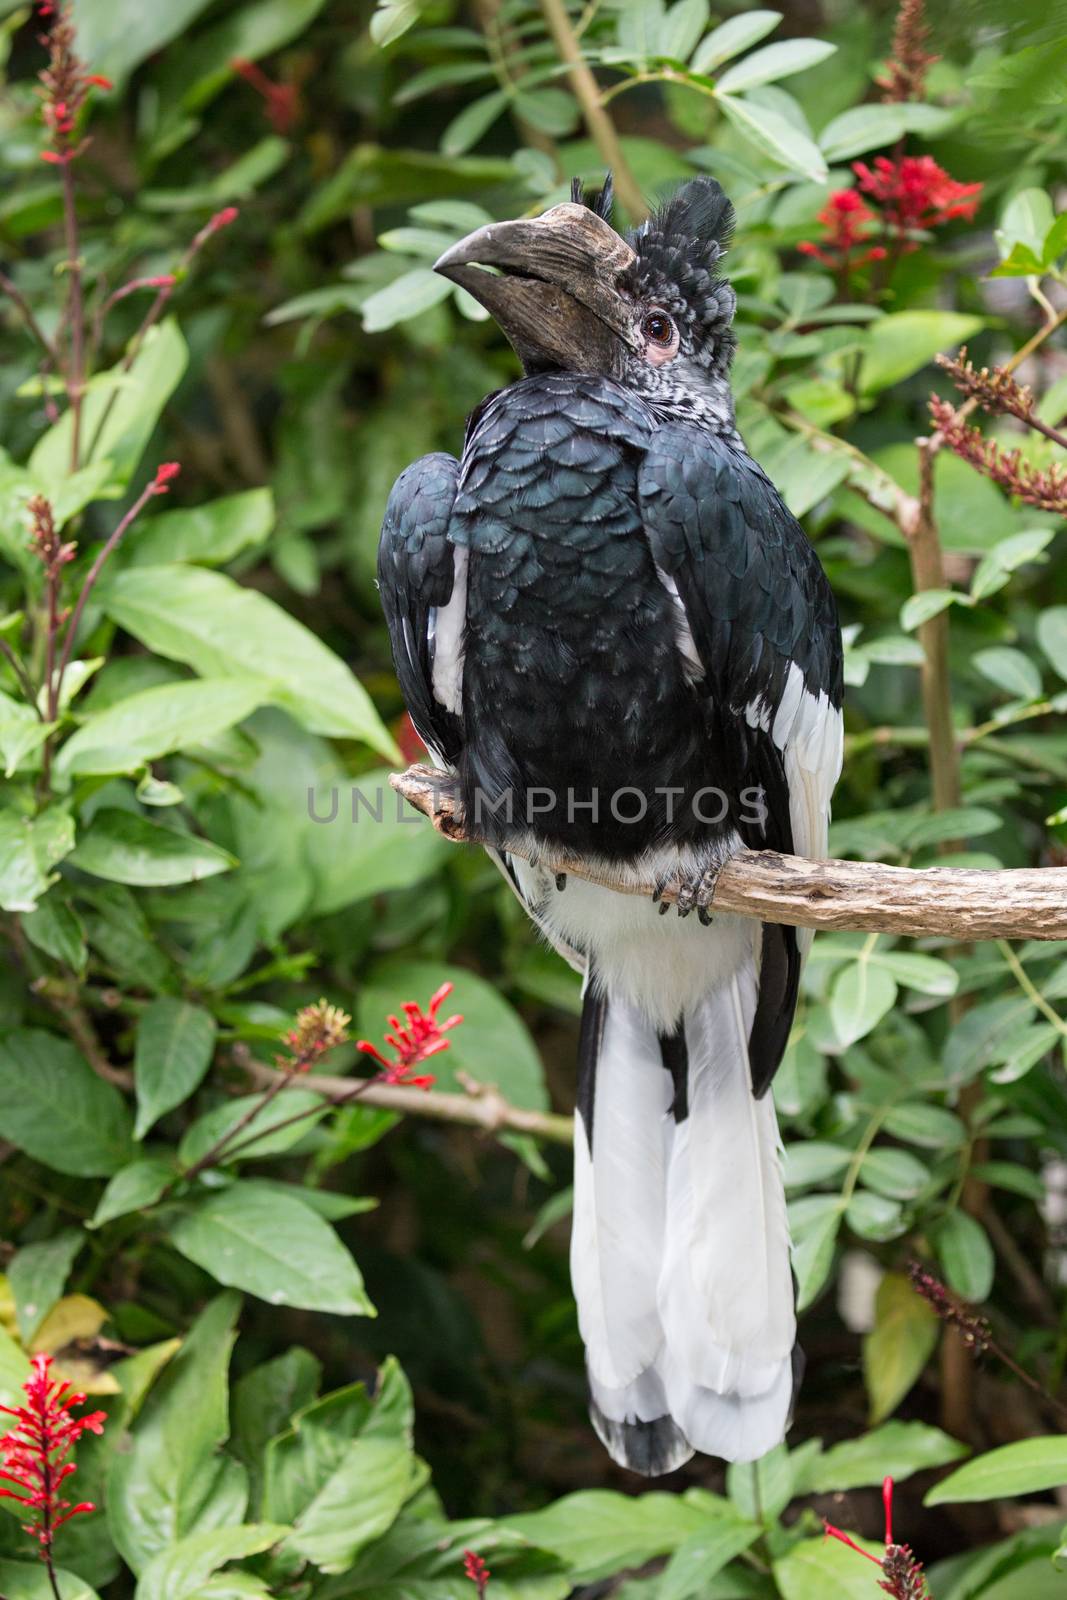 Hornbill Bird with Large Beak by fouroaks